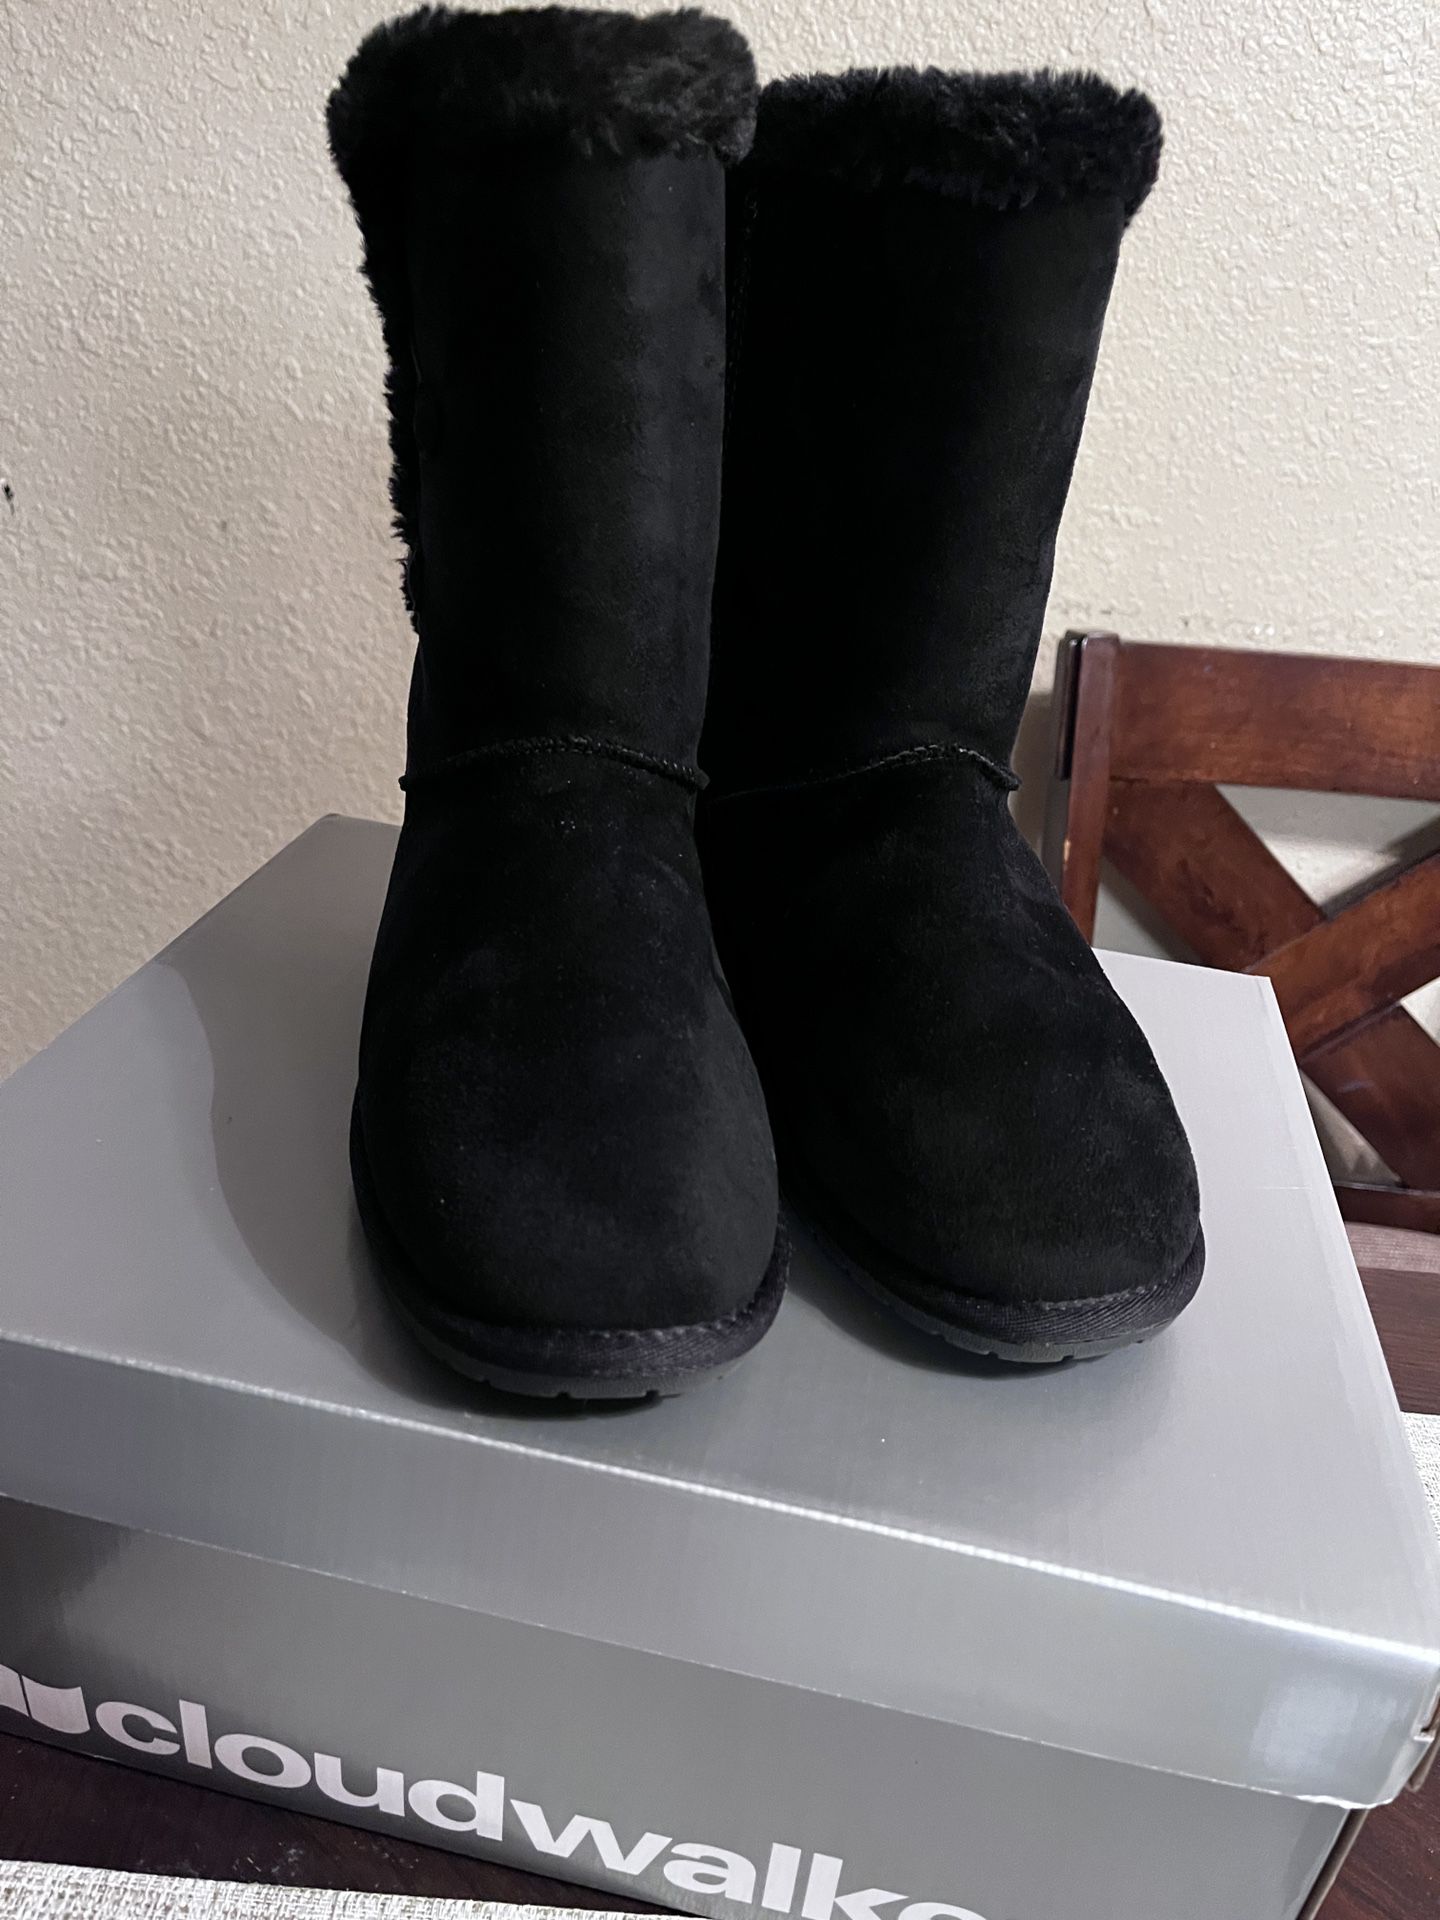 Womens Faux Fur Cloud walkers Boots Size 8.5 